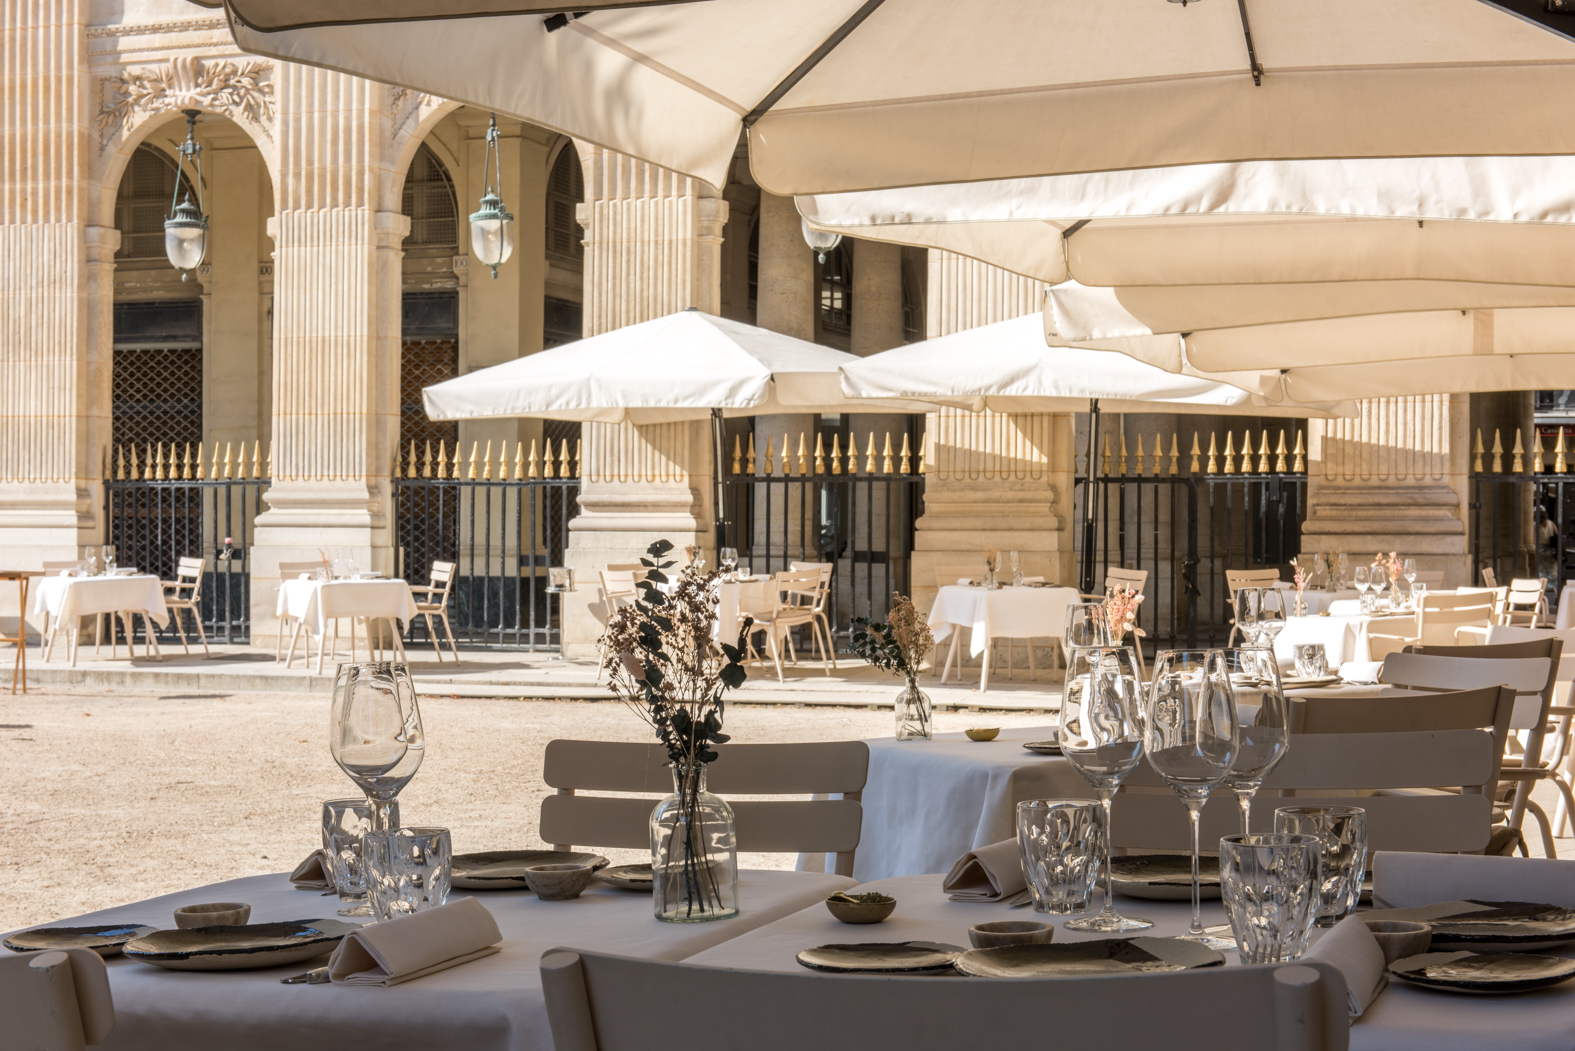 Restaurant Palais Royal - 2 stars Michelin guide - Paris 1st